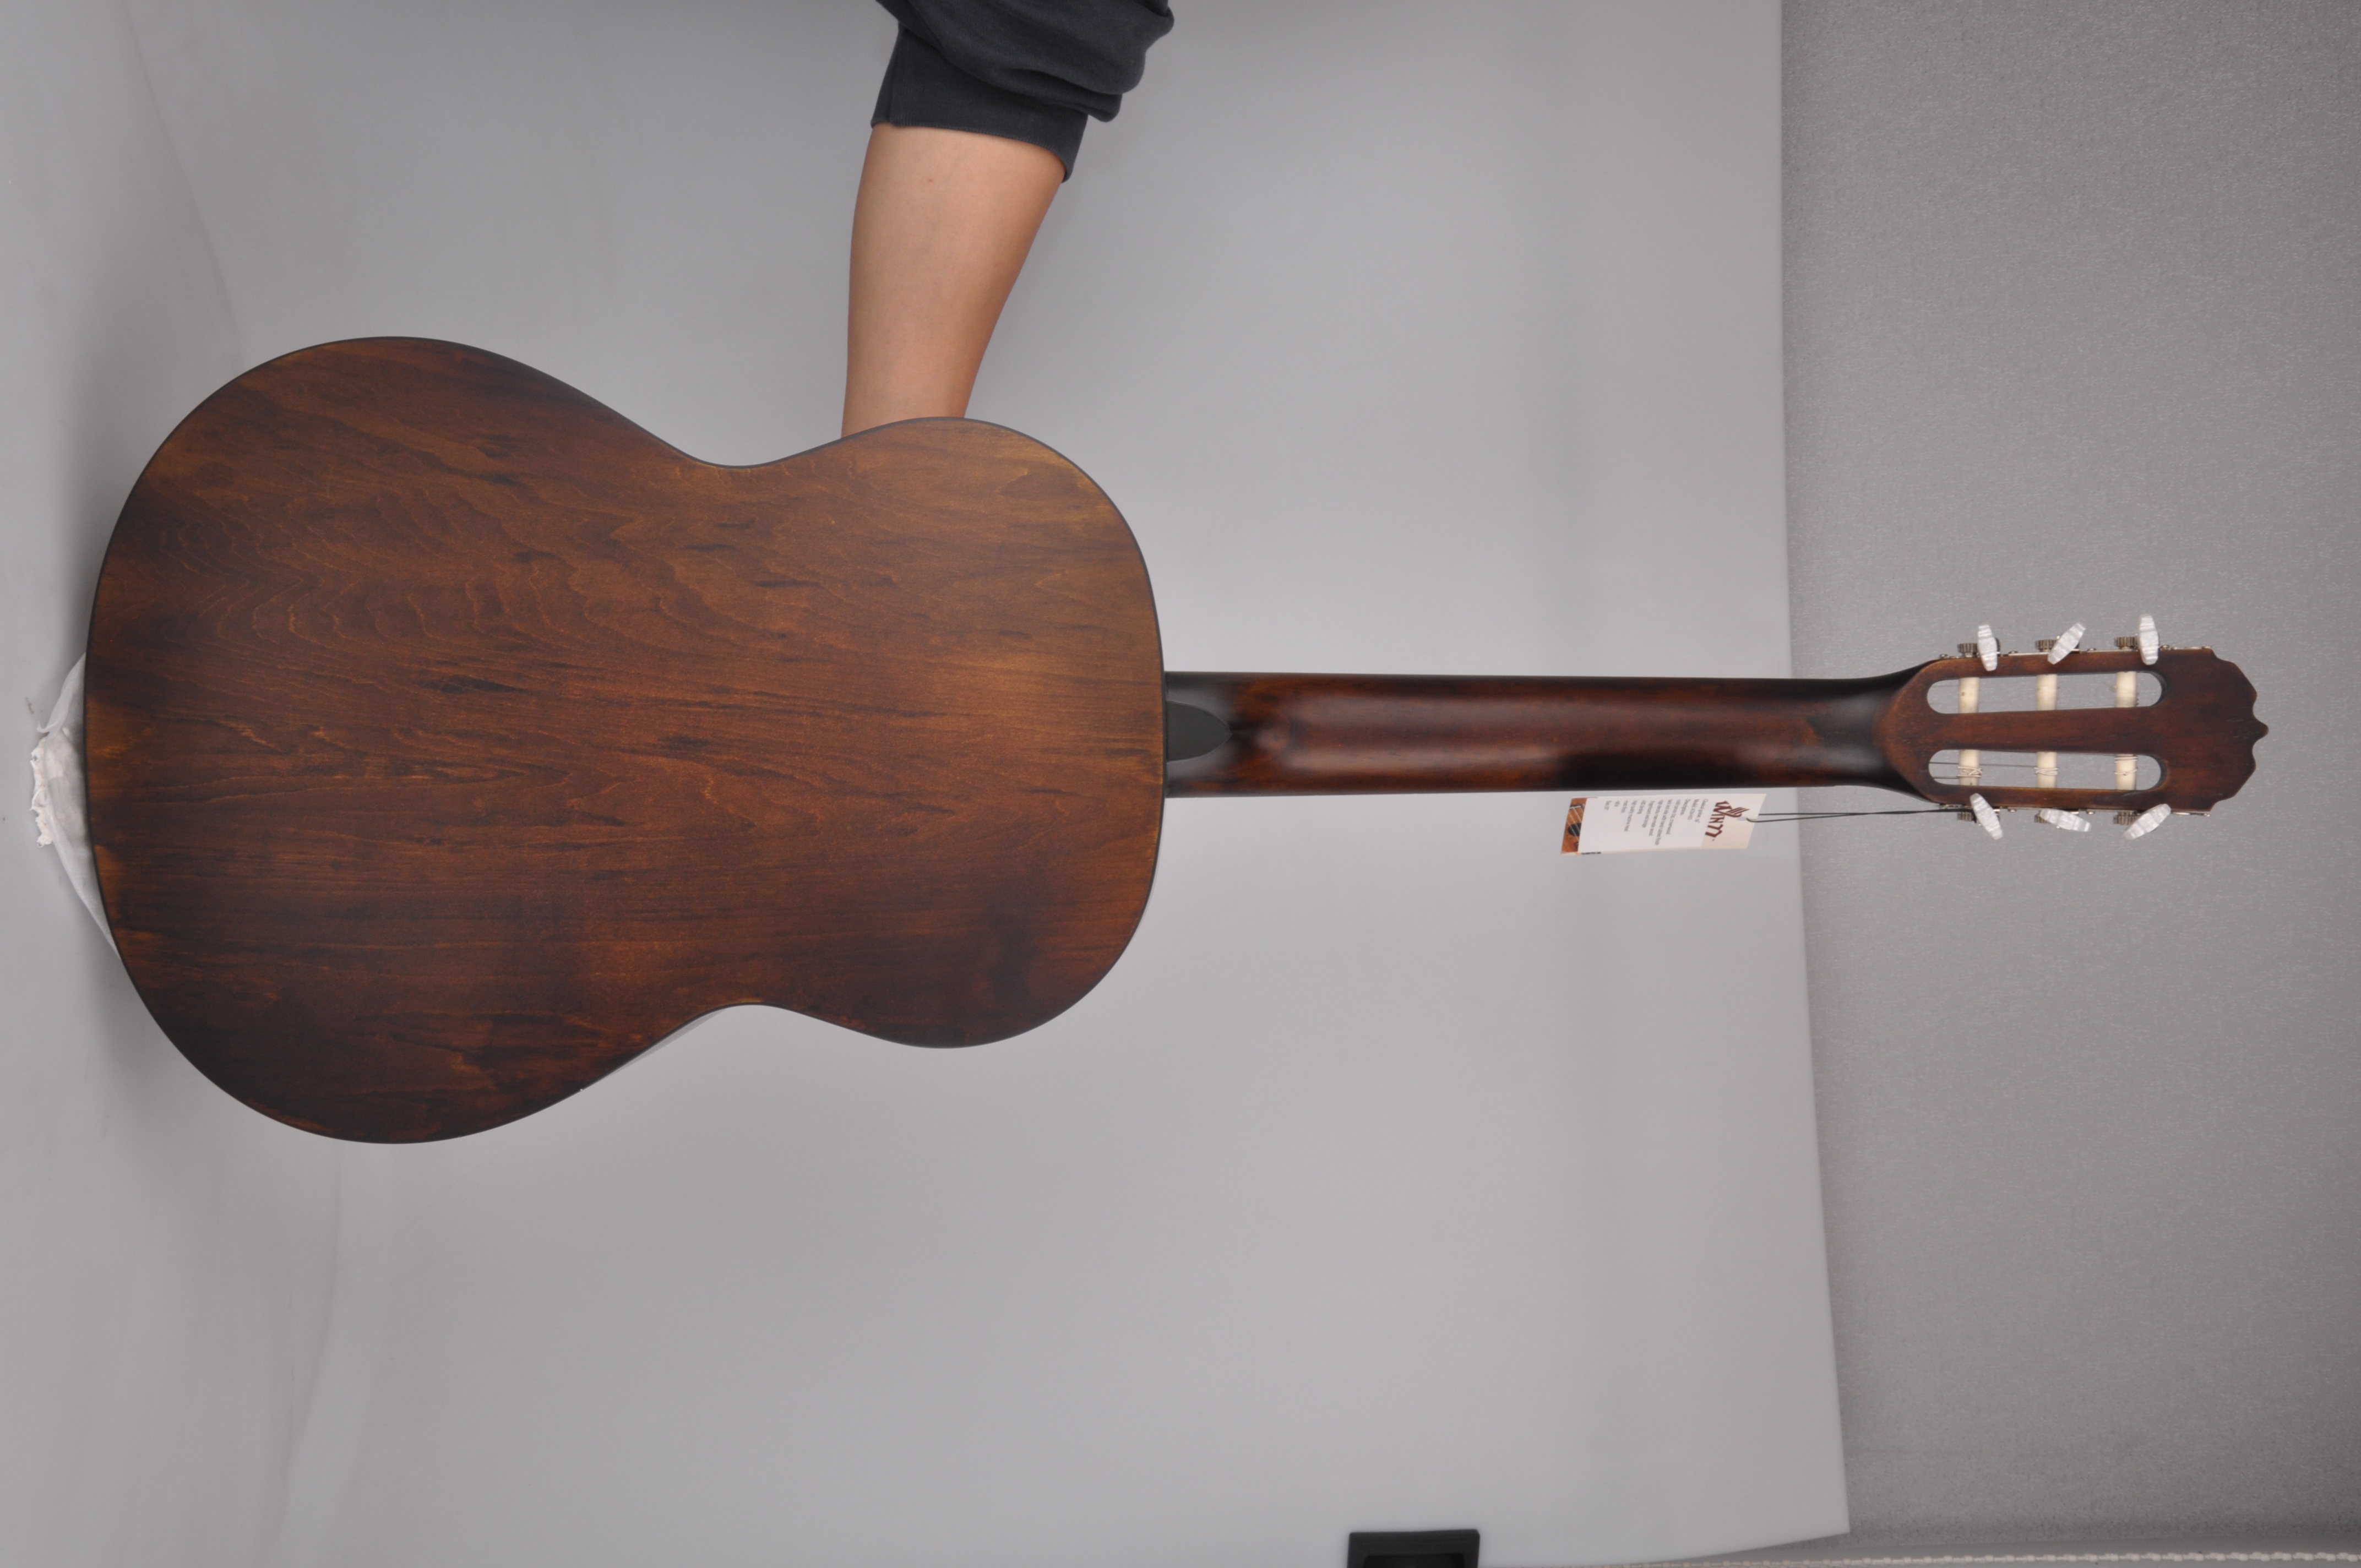 Guitarra clásica de color natural con encuadernación ABS de 39 pulgadas (ACM-H10)